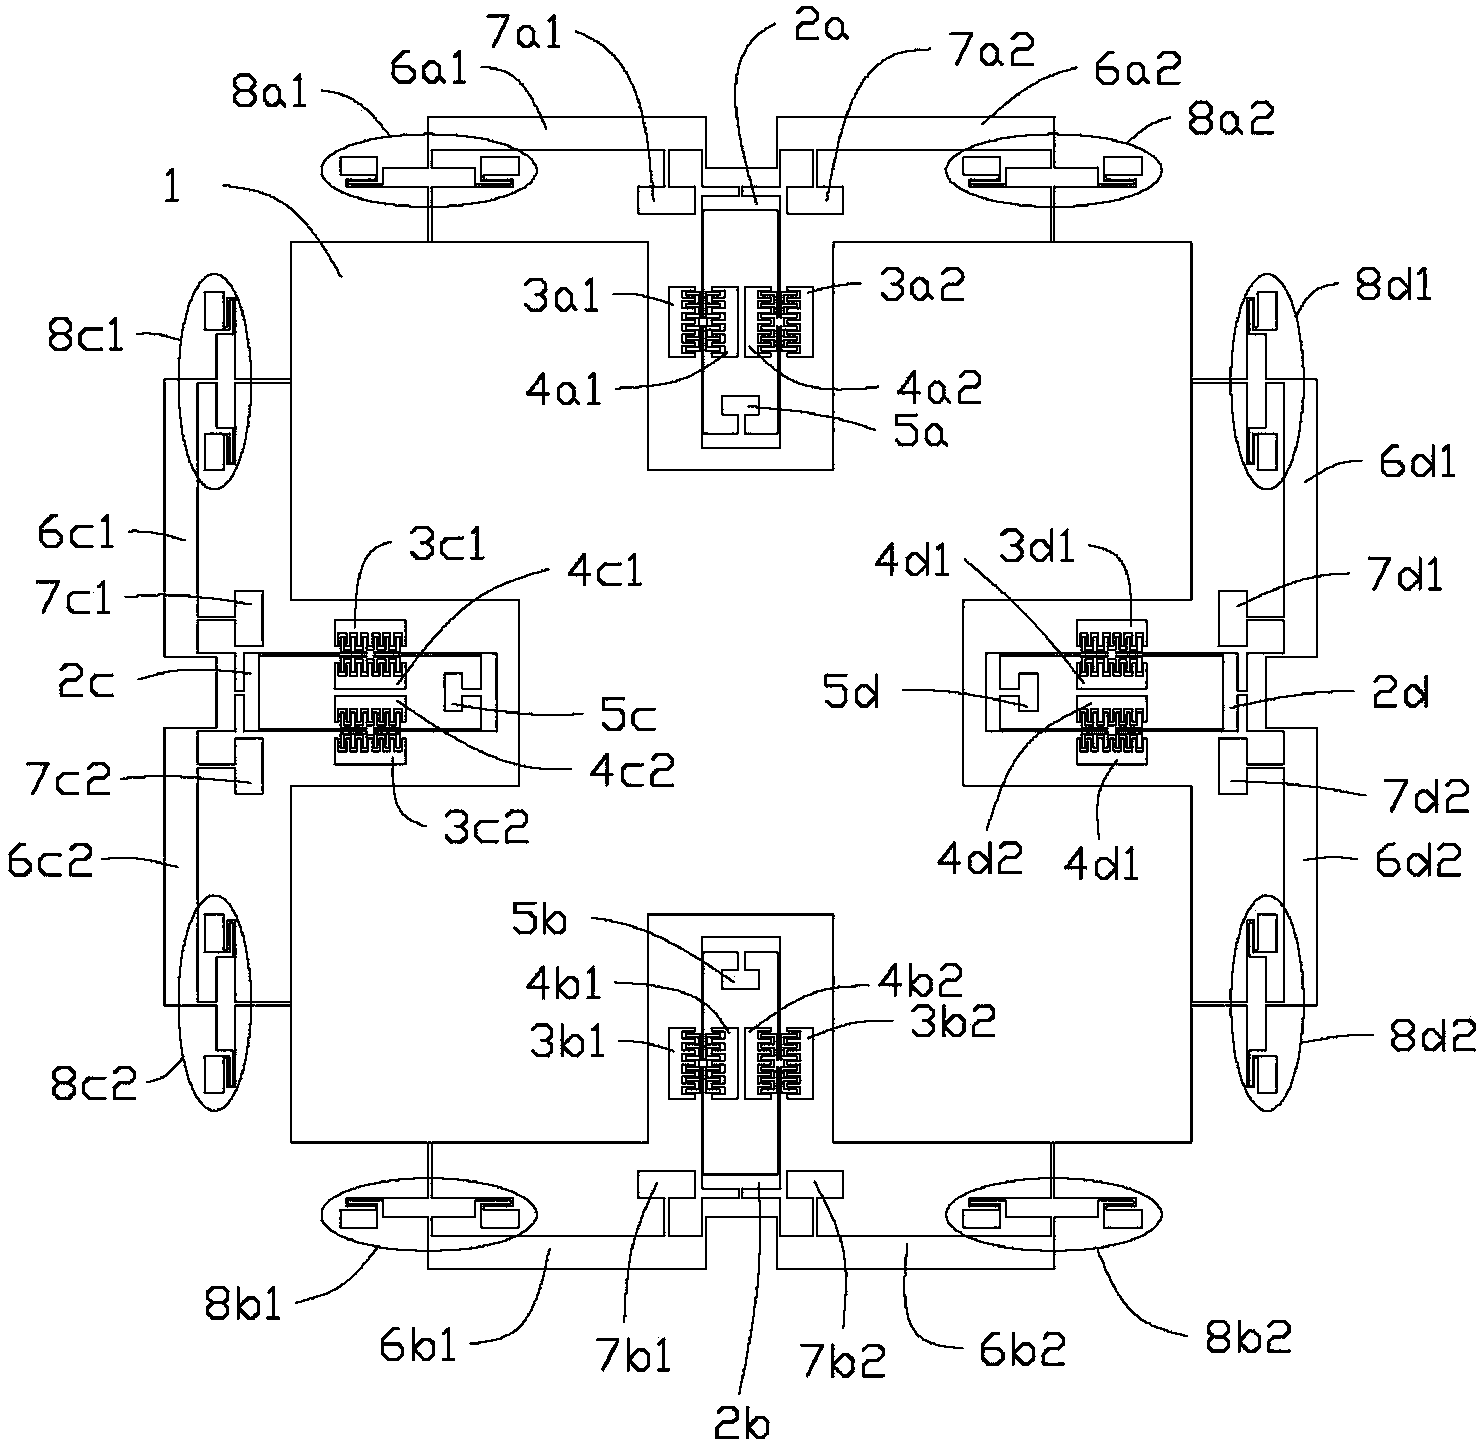 Silicon micro-resonant type accelerometer